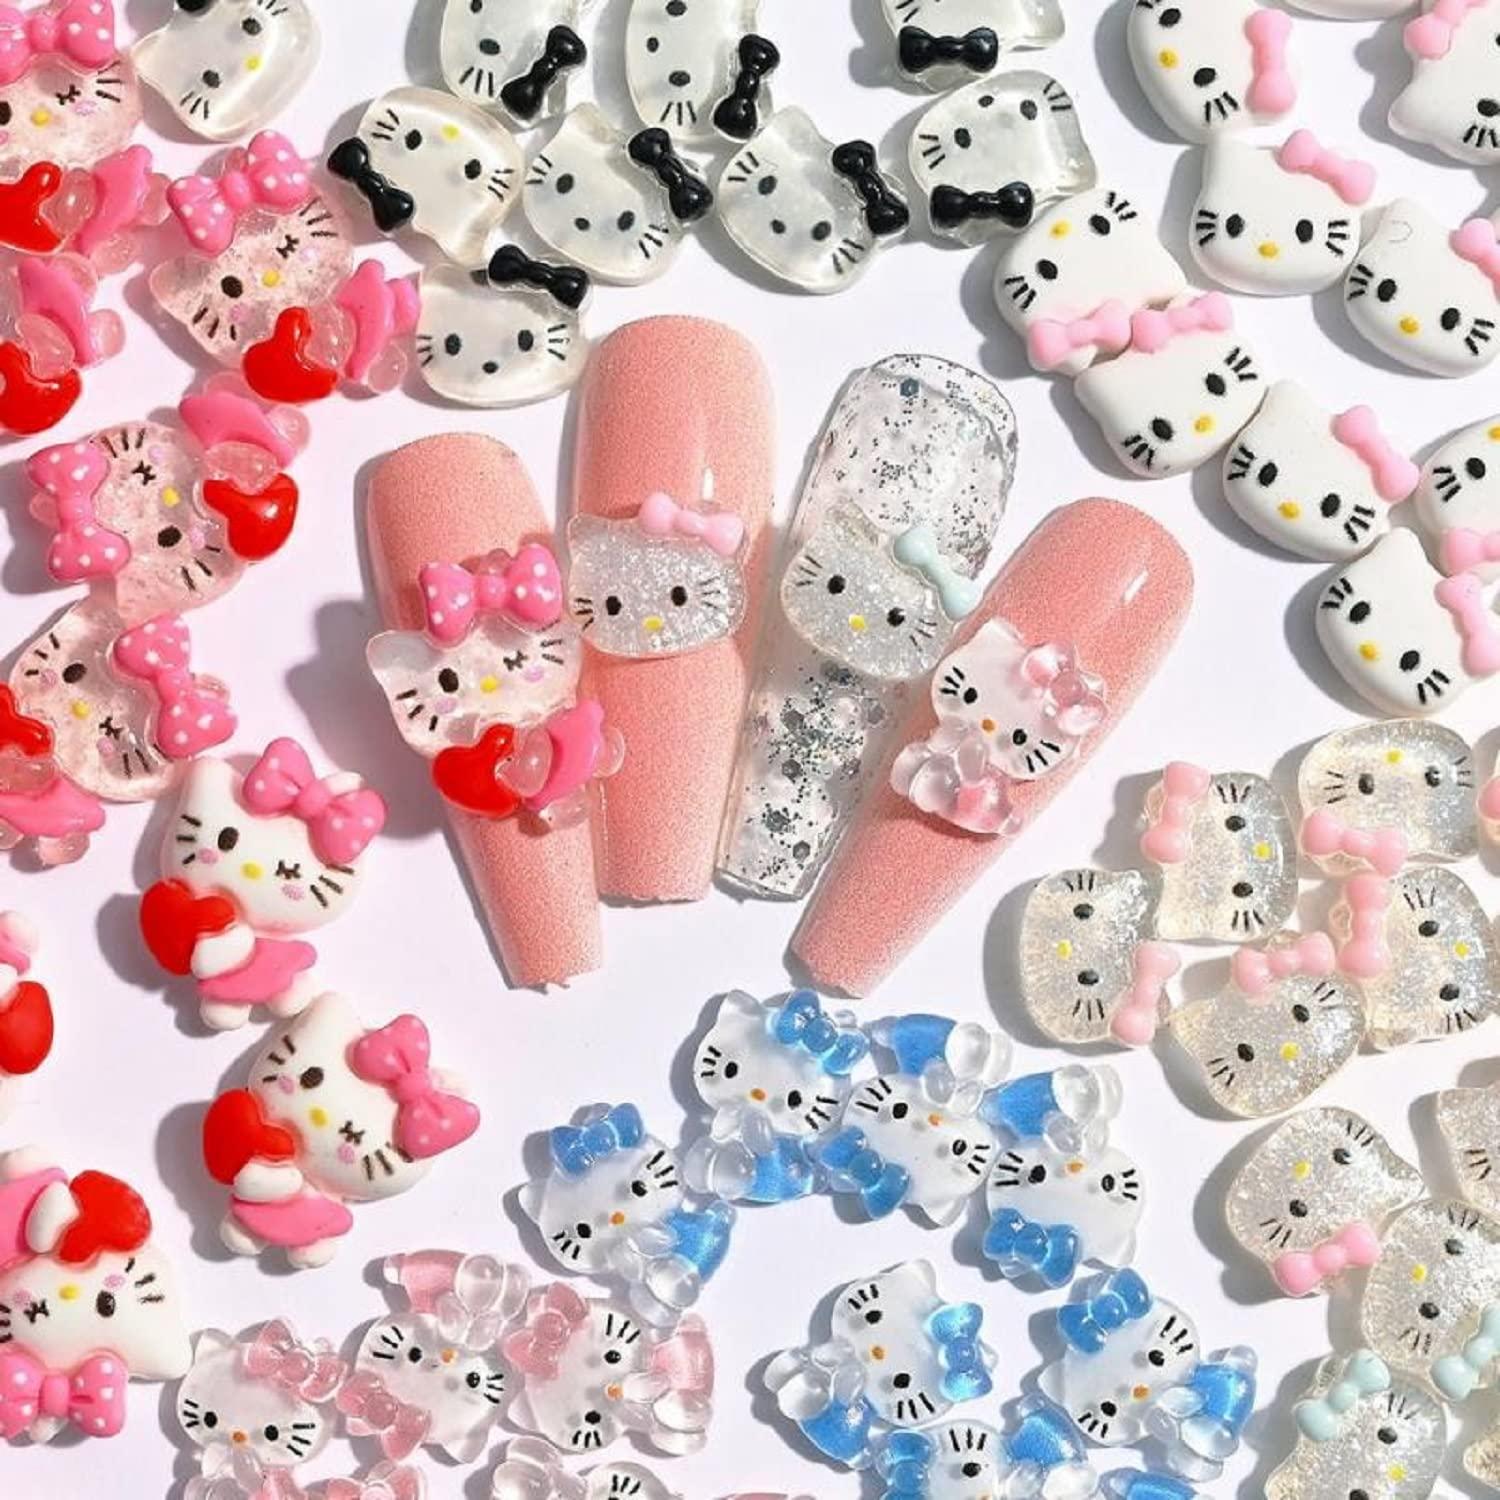 Multicolor Glitter Nail Accessories , 3D Nail Glitter Flakes Acrylic Nails  Powder Shiny with 48 arts shades